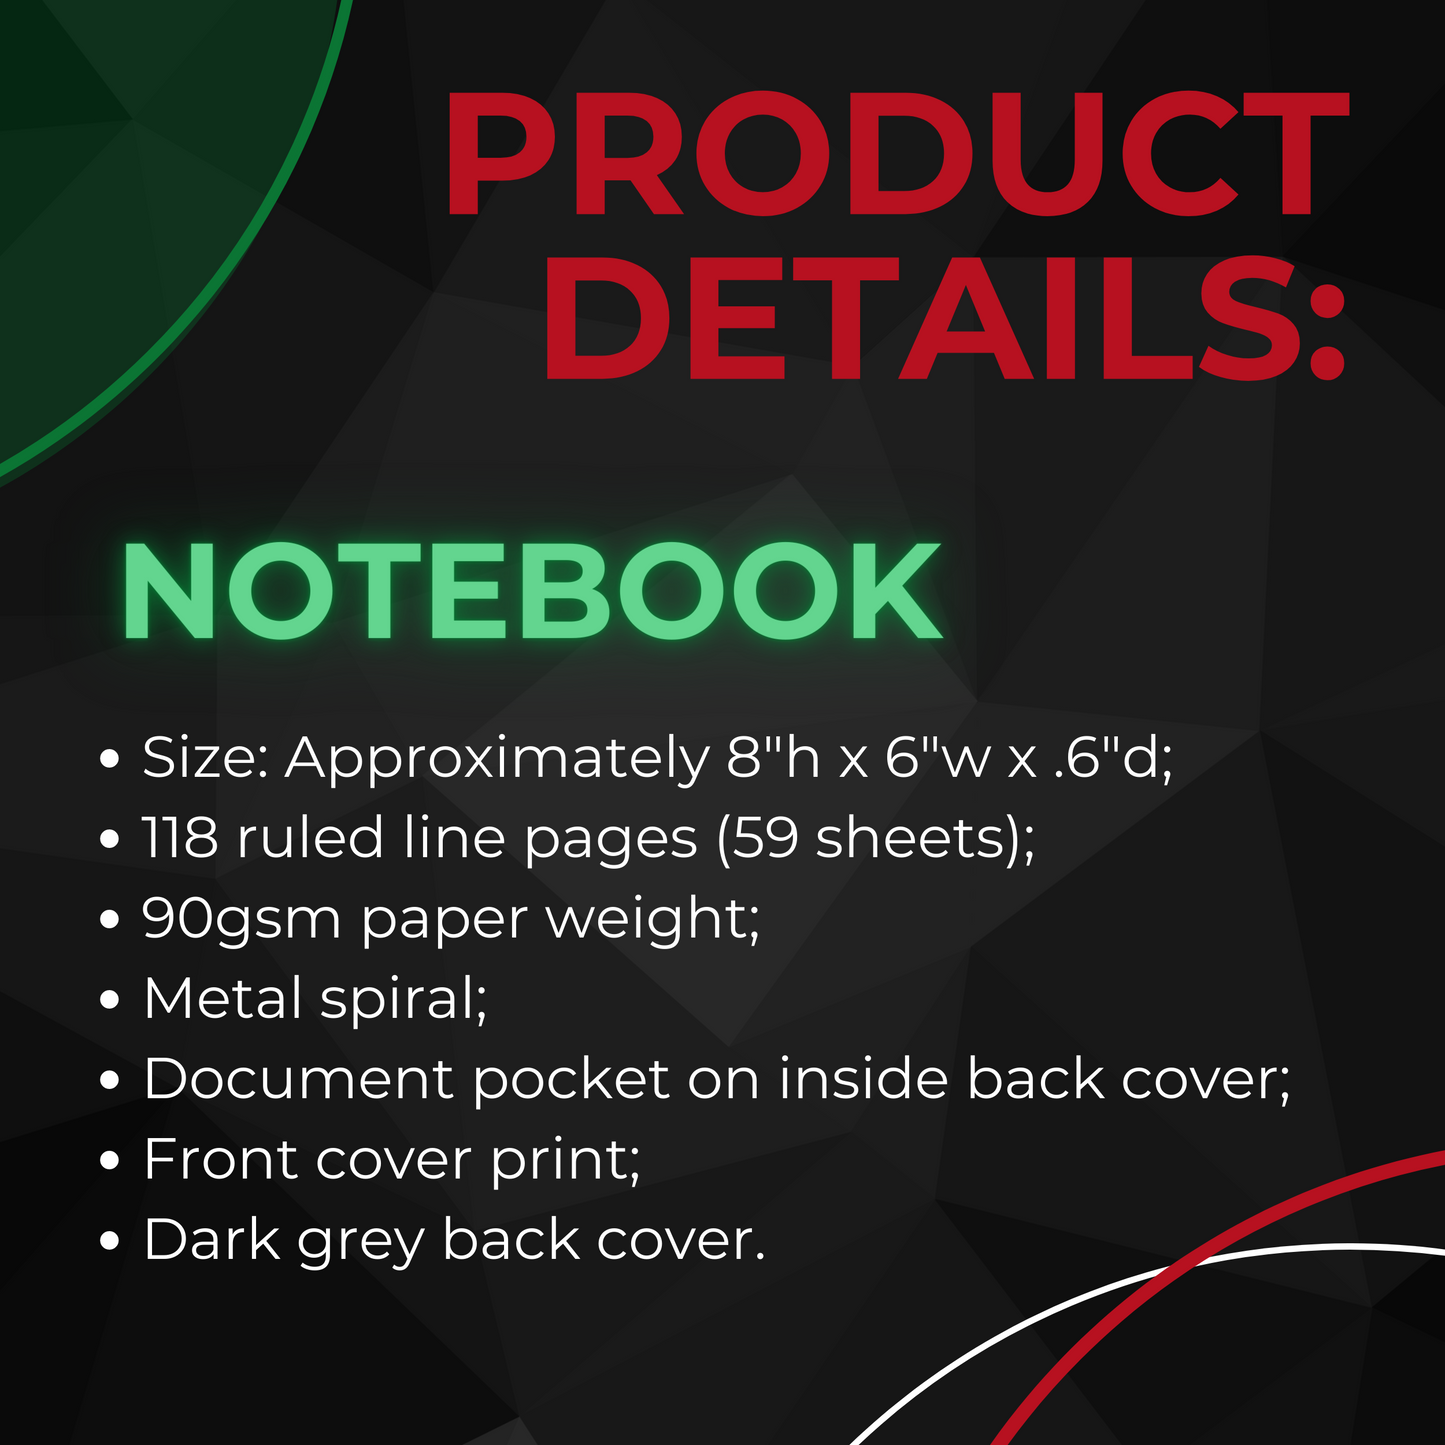 DST Elephant Icon Mini Notebook - Black